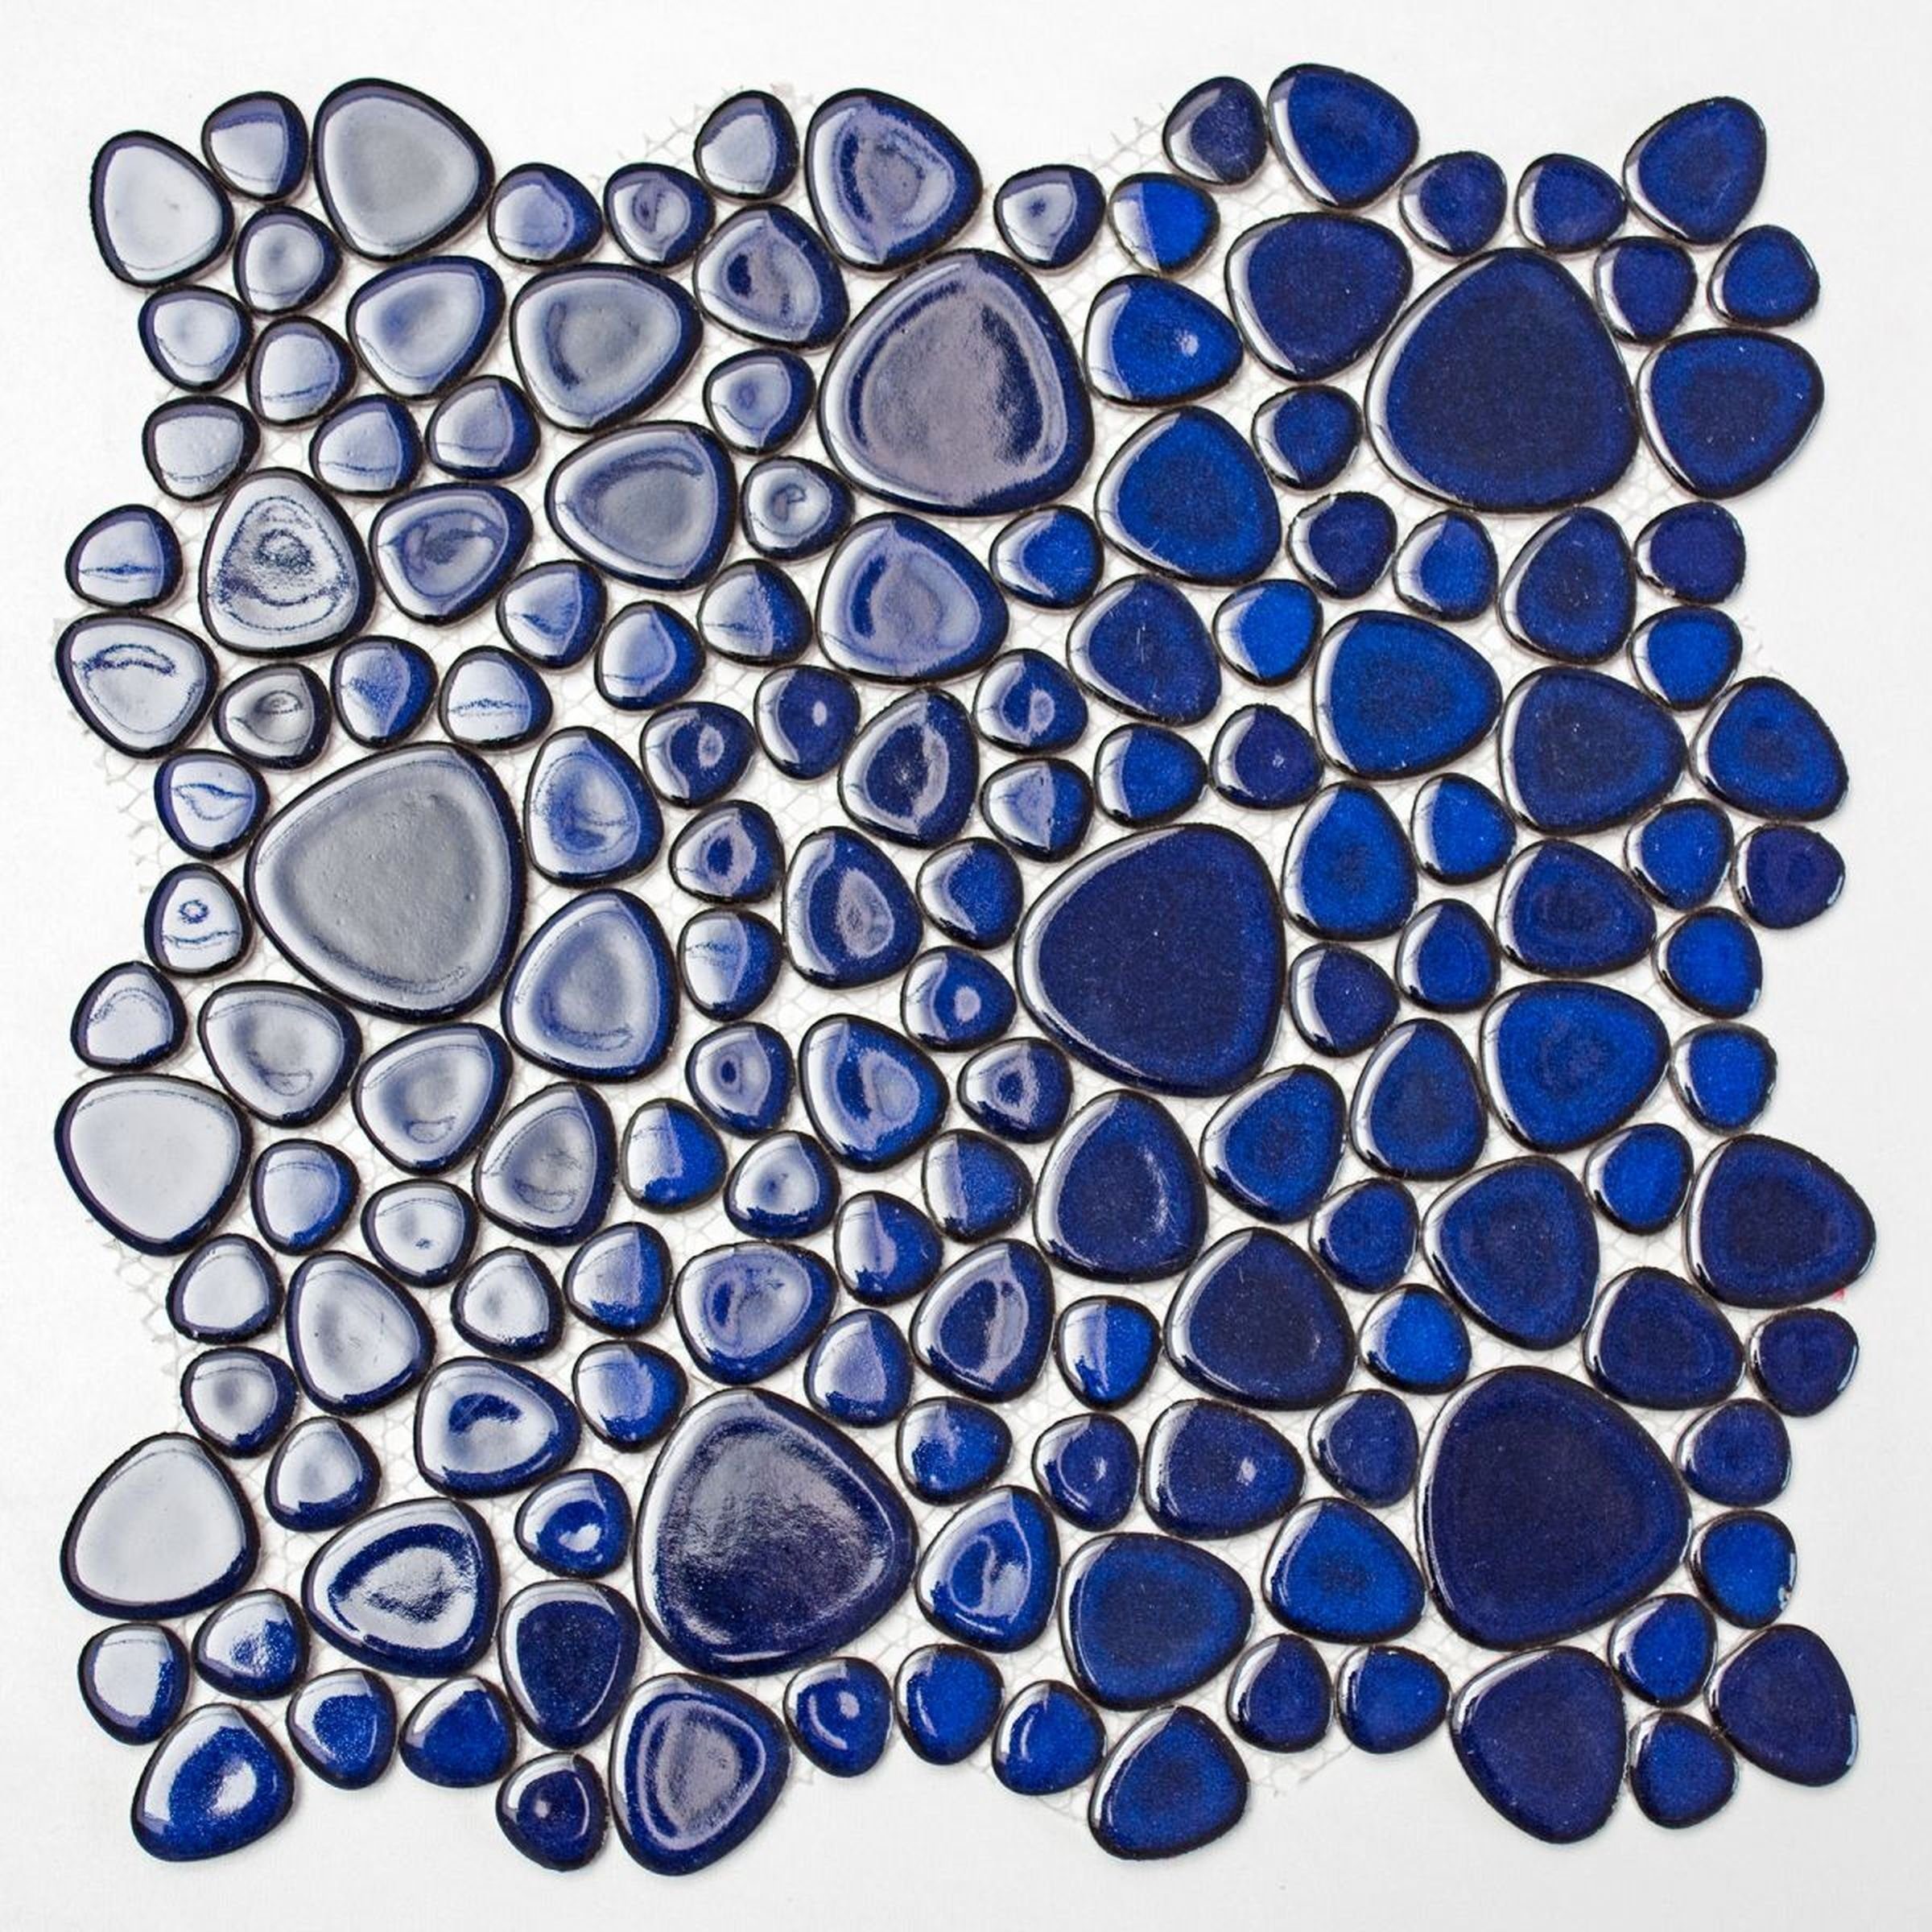 Mosani Mosaikfliesen Kieselmosaik Pebbles Keramikdrops blau glänzend Fliesenspiegel